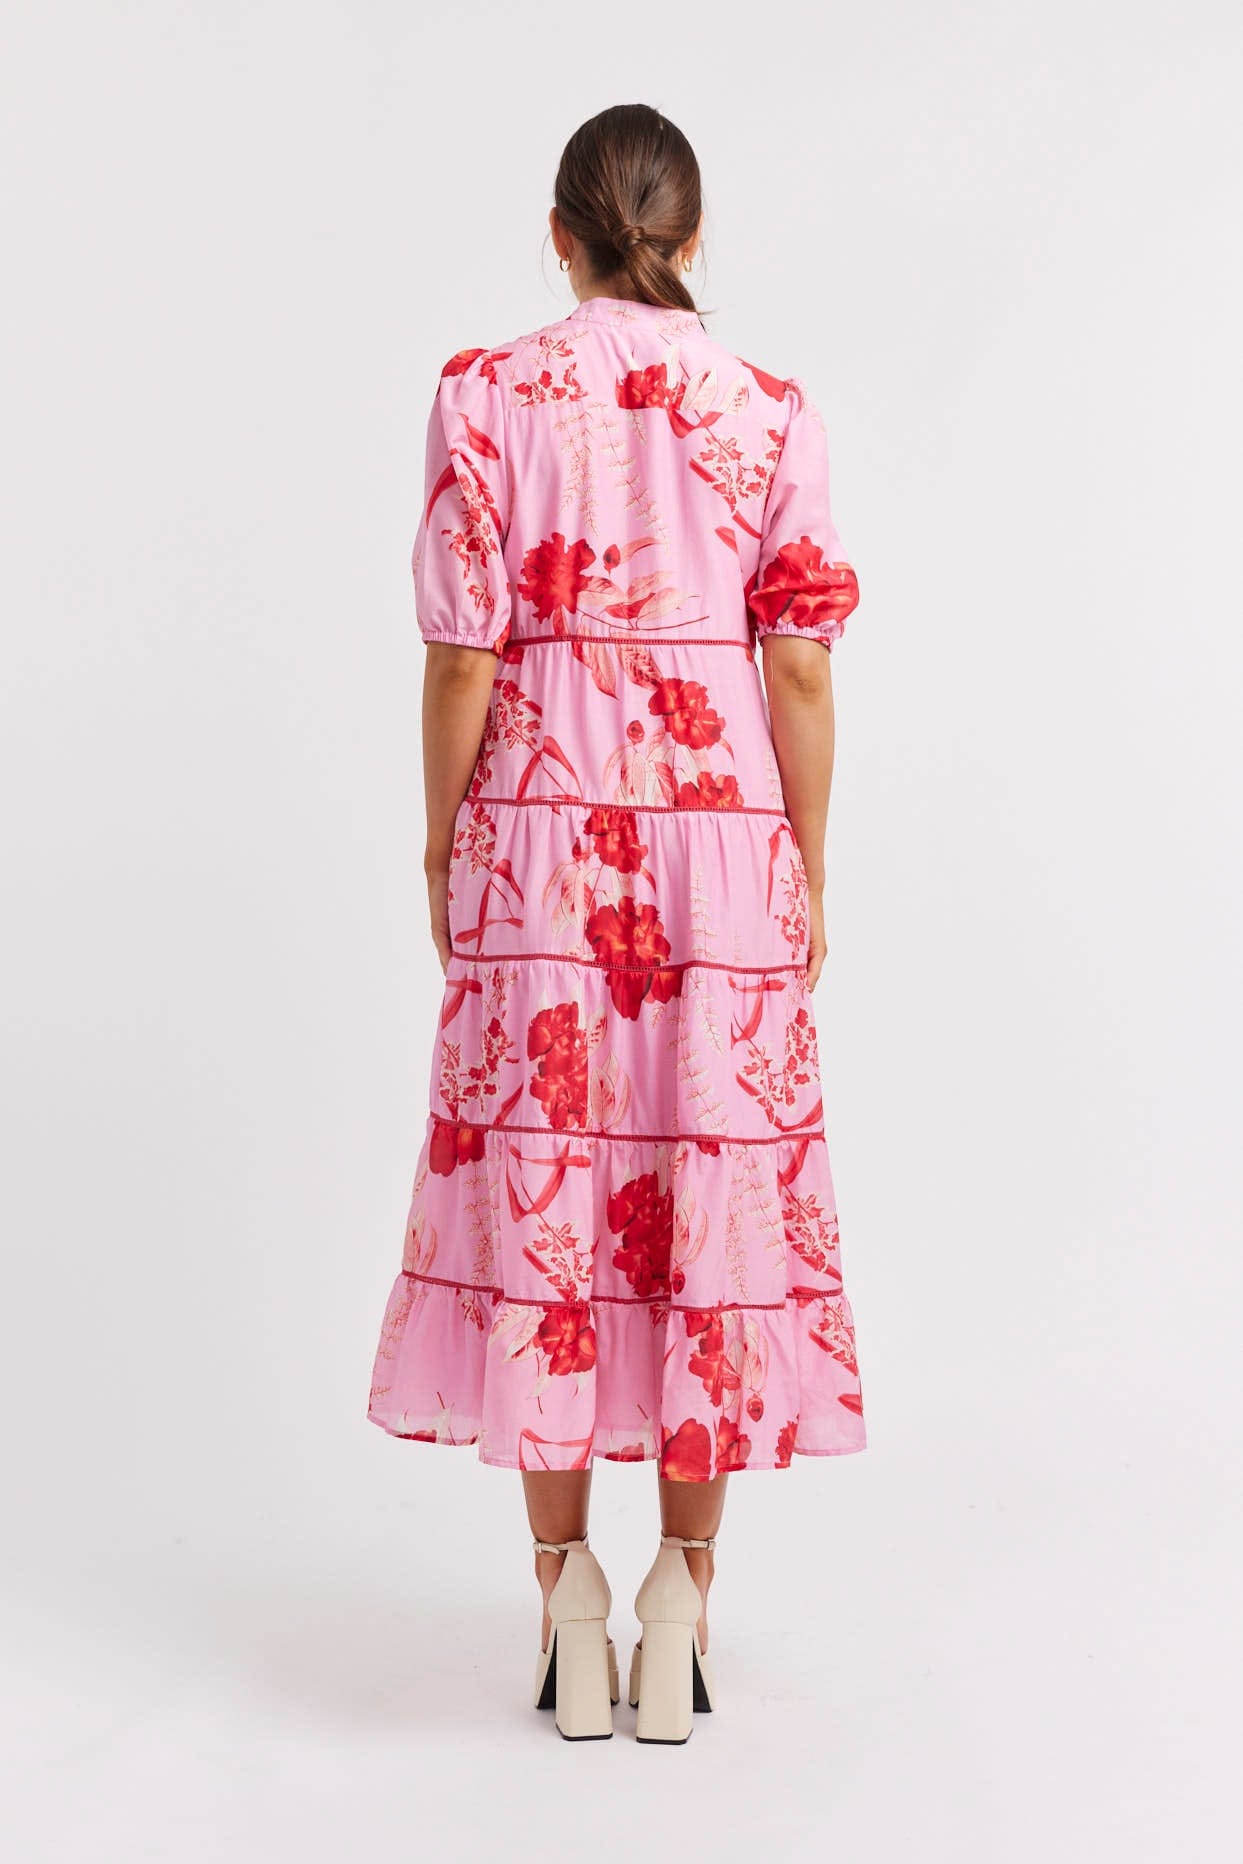 Alessandra LAMBADA COTTON SILK DRESS IN LOLLY NIGHT GARDEN | size 12-14 $349RRP